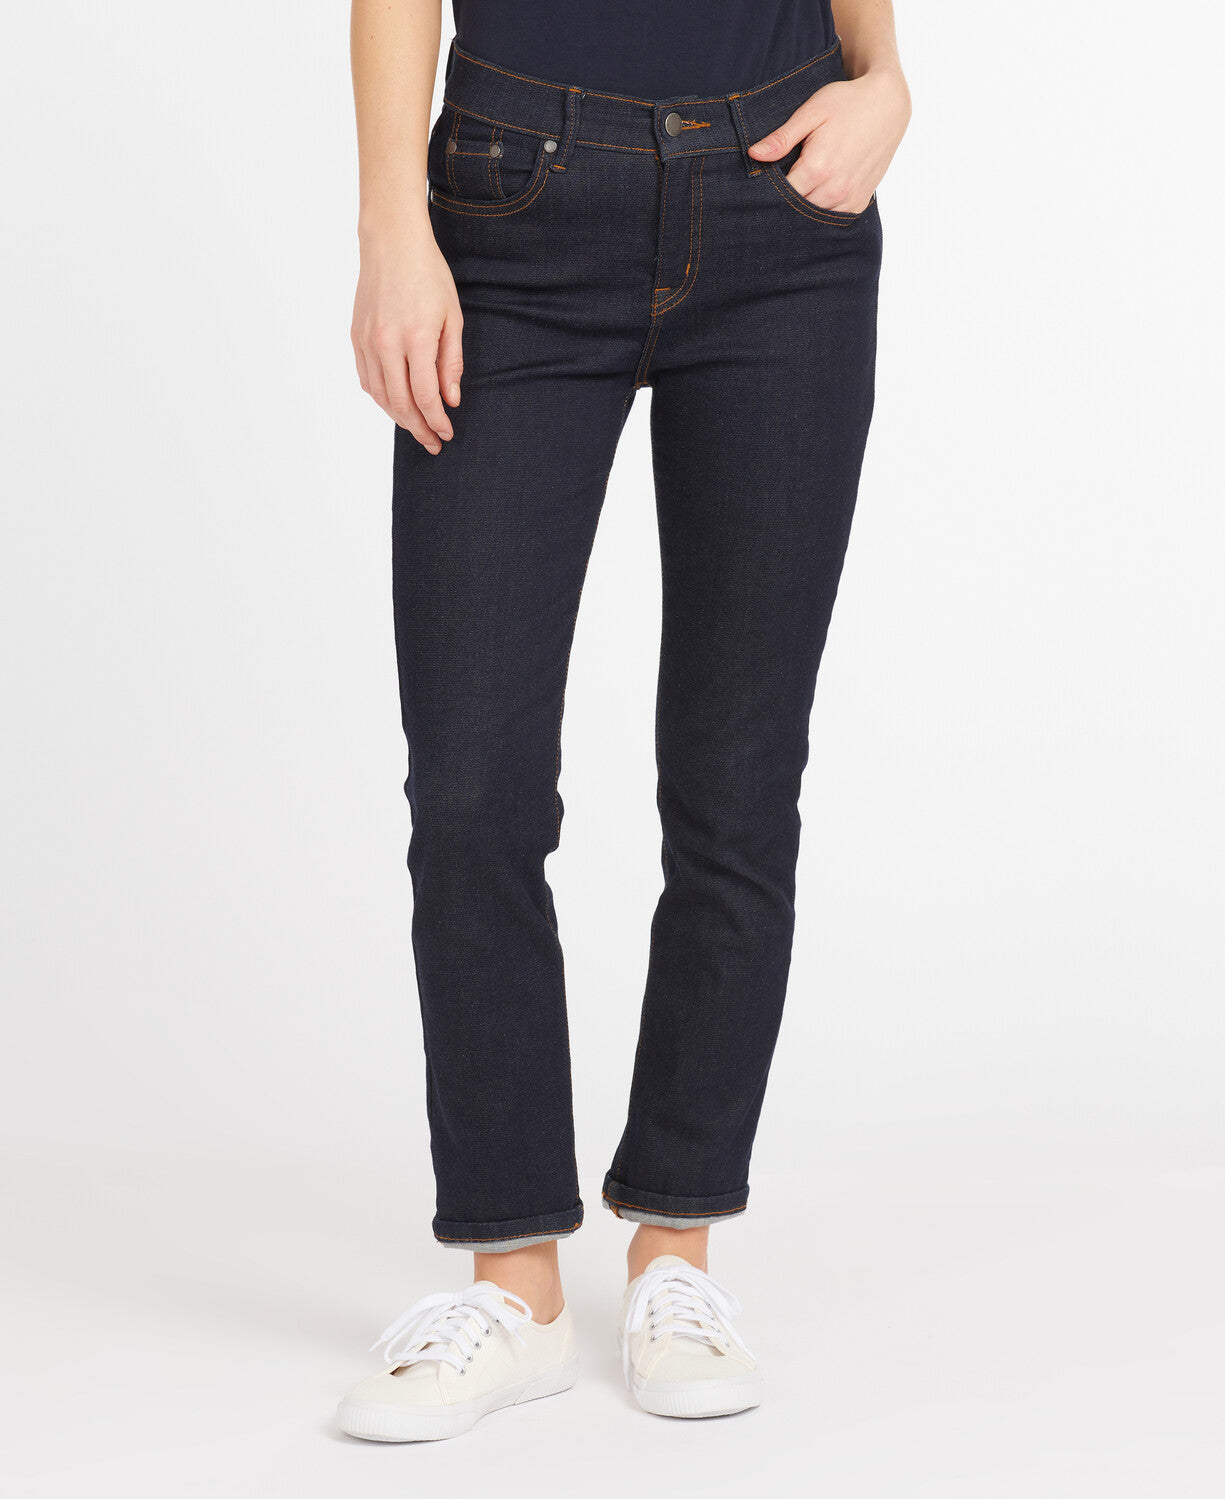 Barbour Women’s Essential Slim Jeans